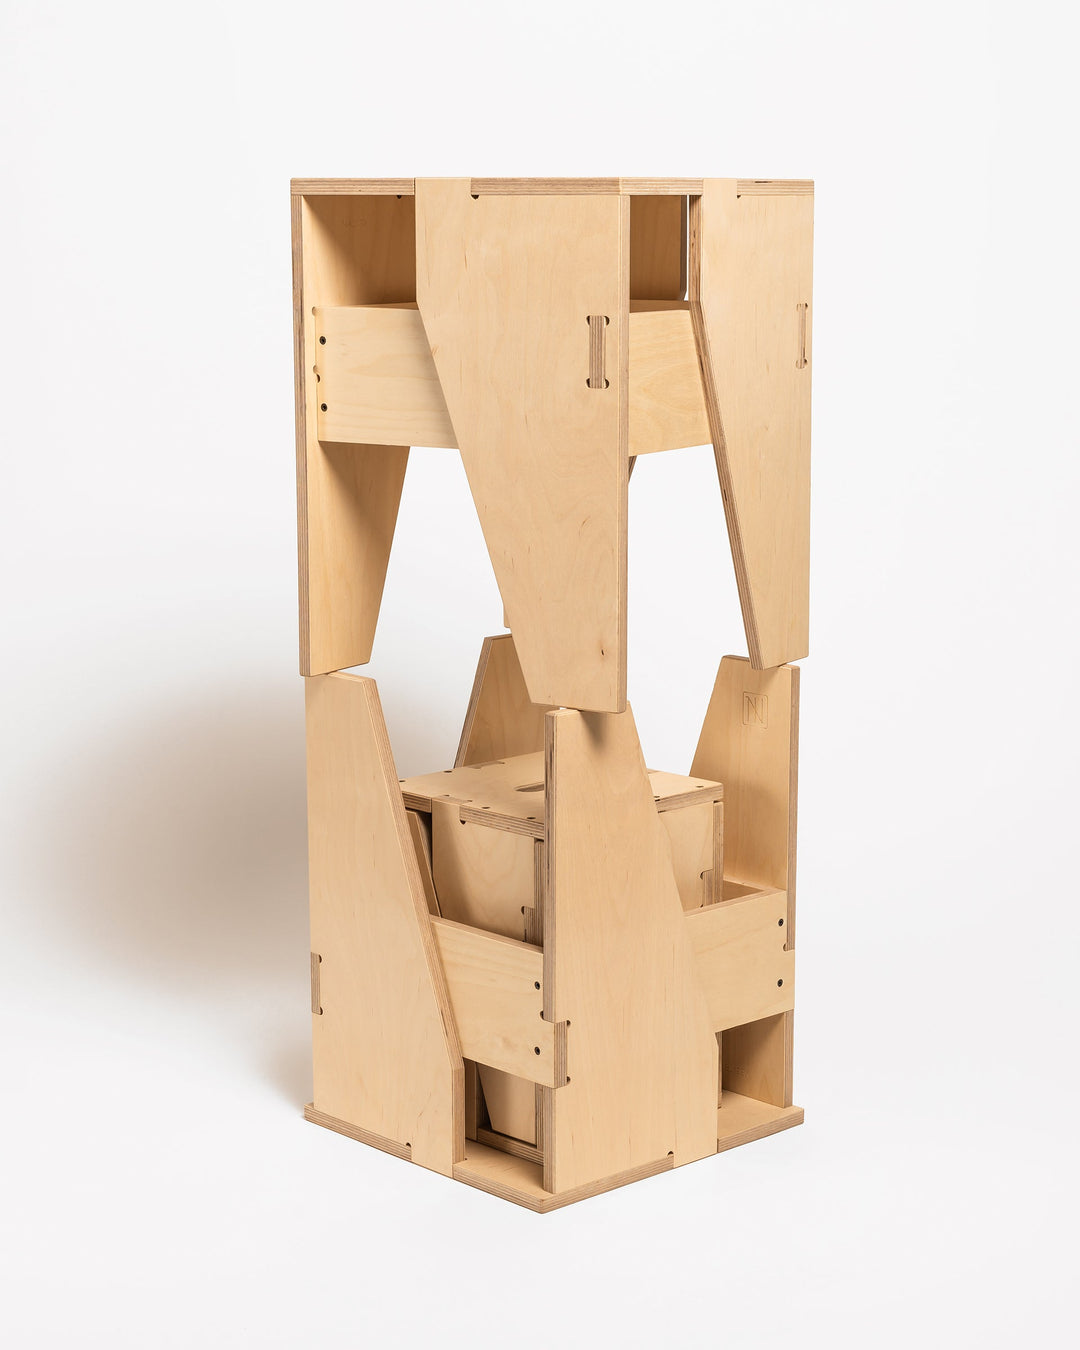 IN | Stackable stools (2019 design)